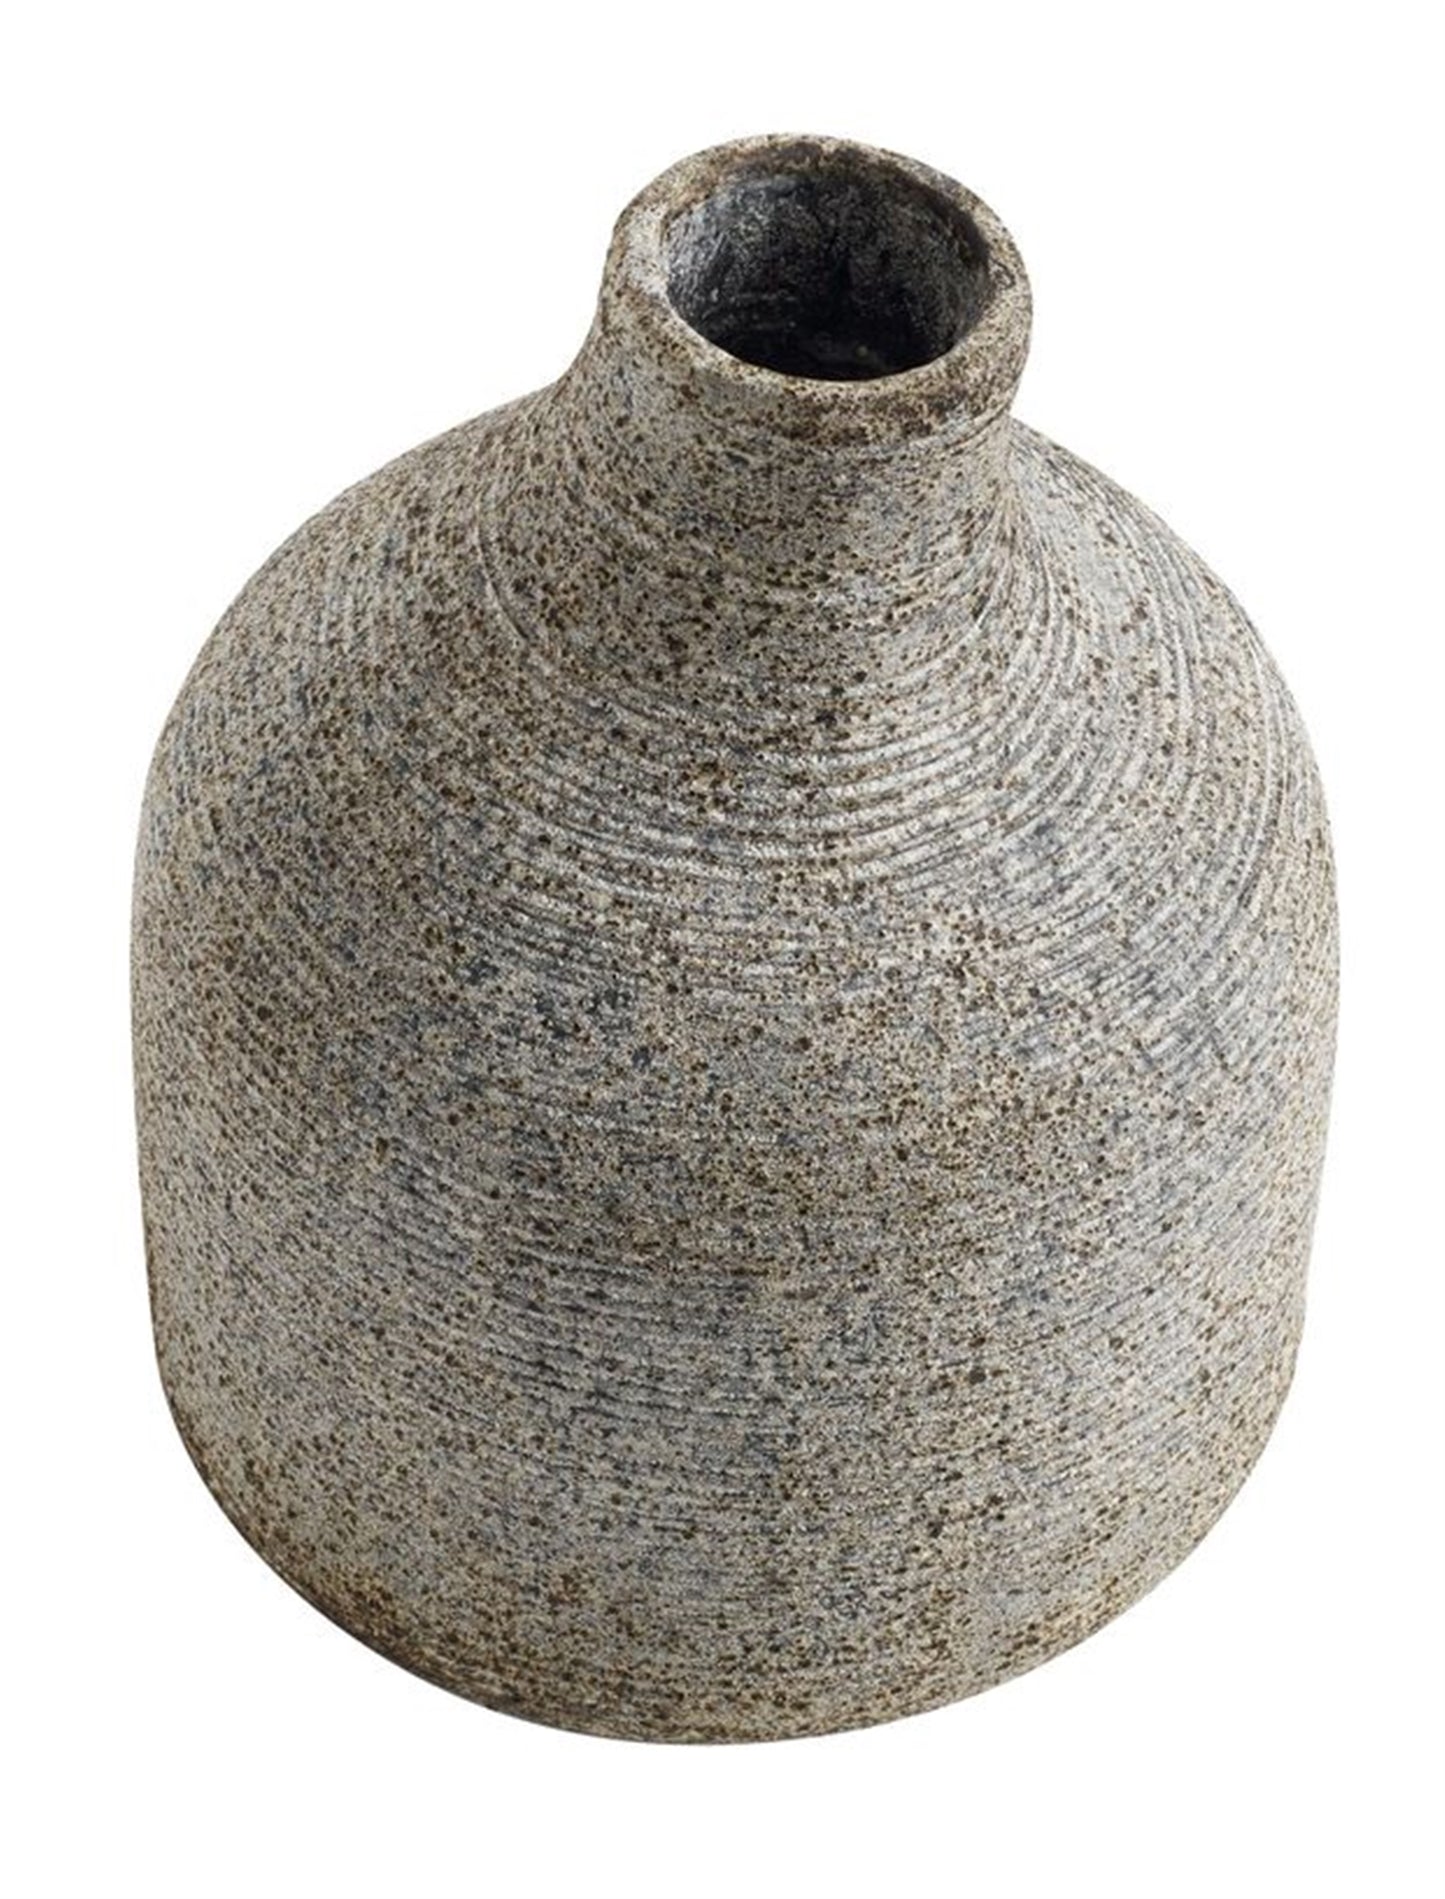 Fin Terracotta Vase